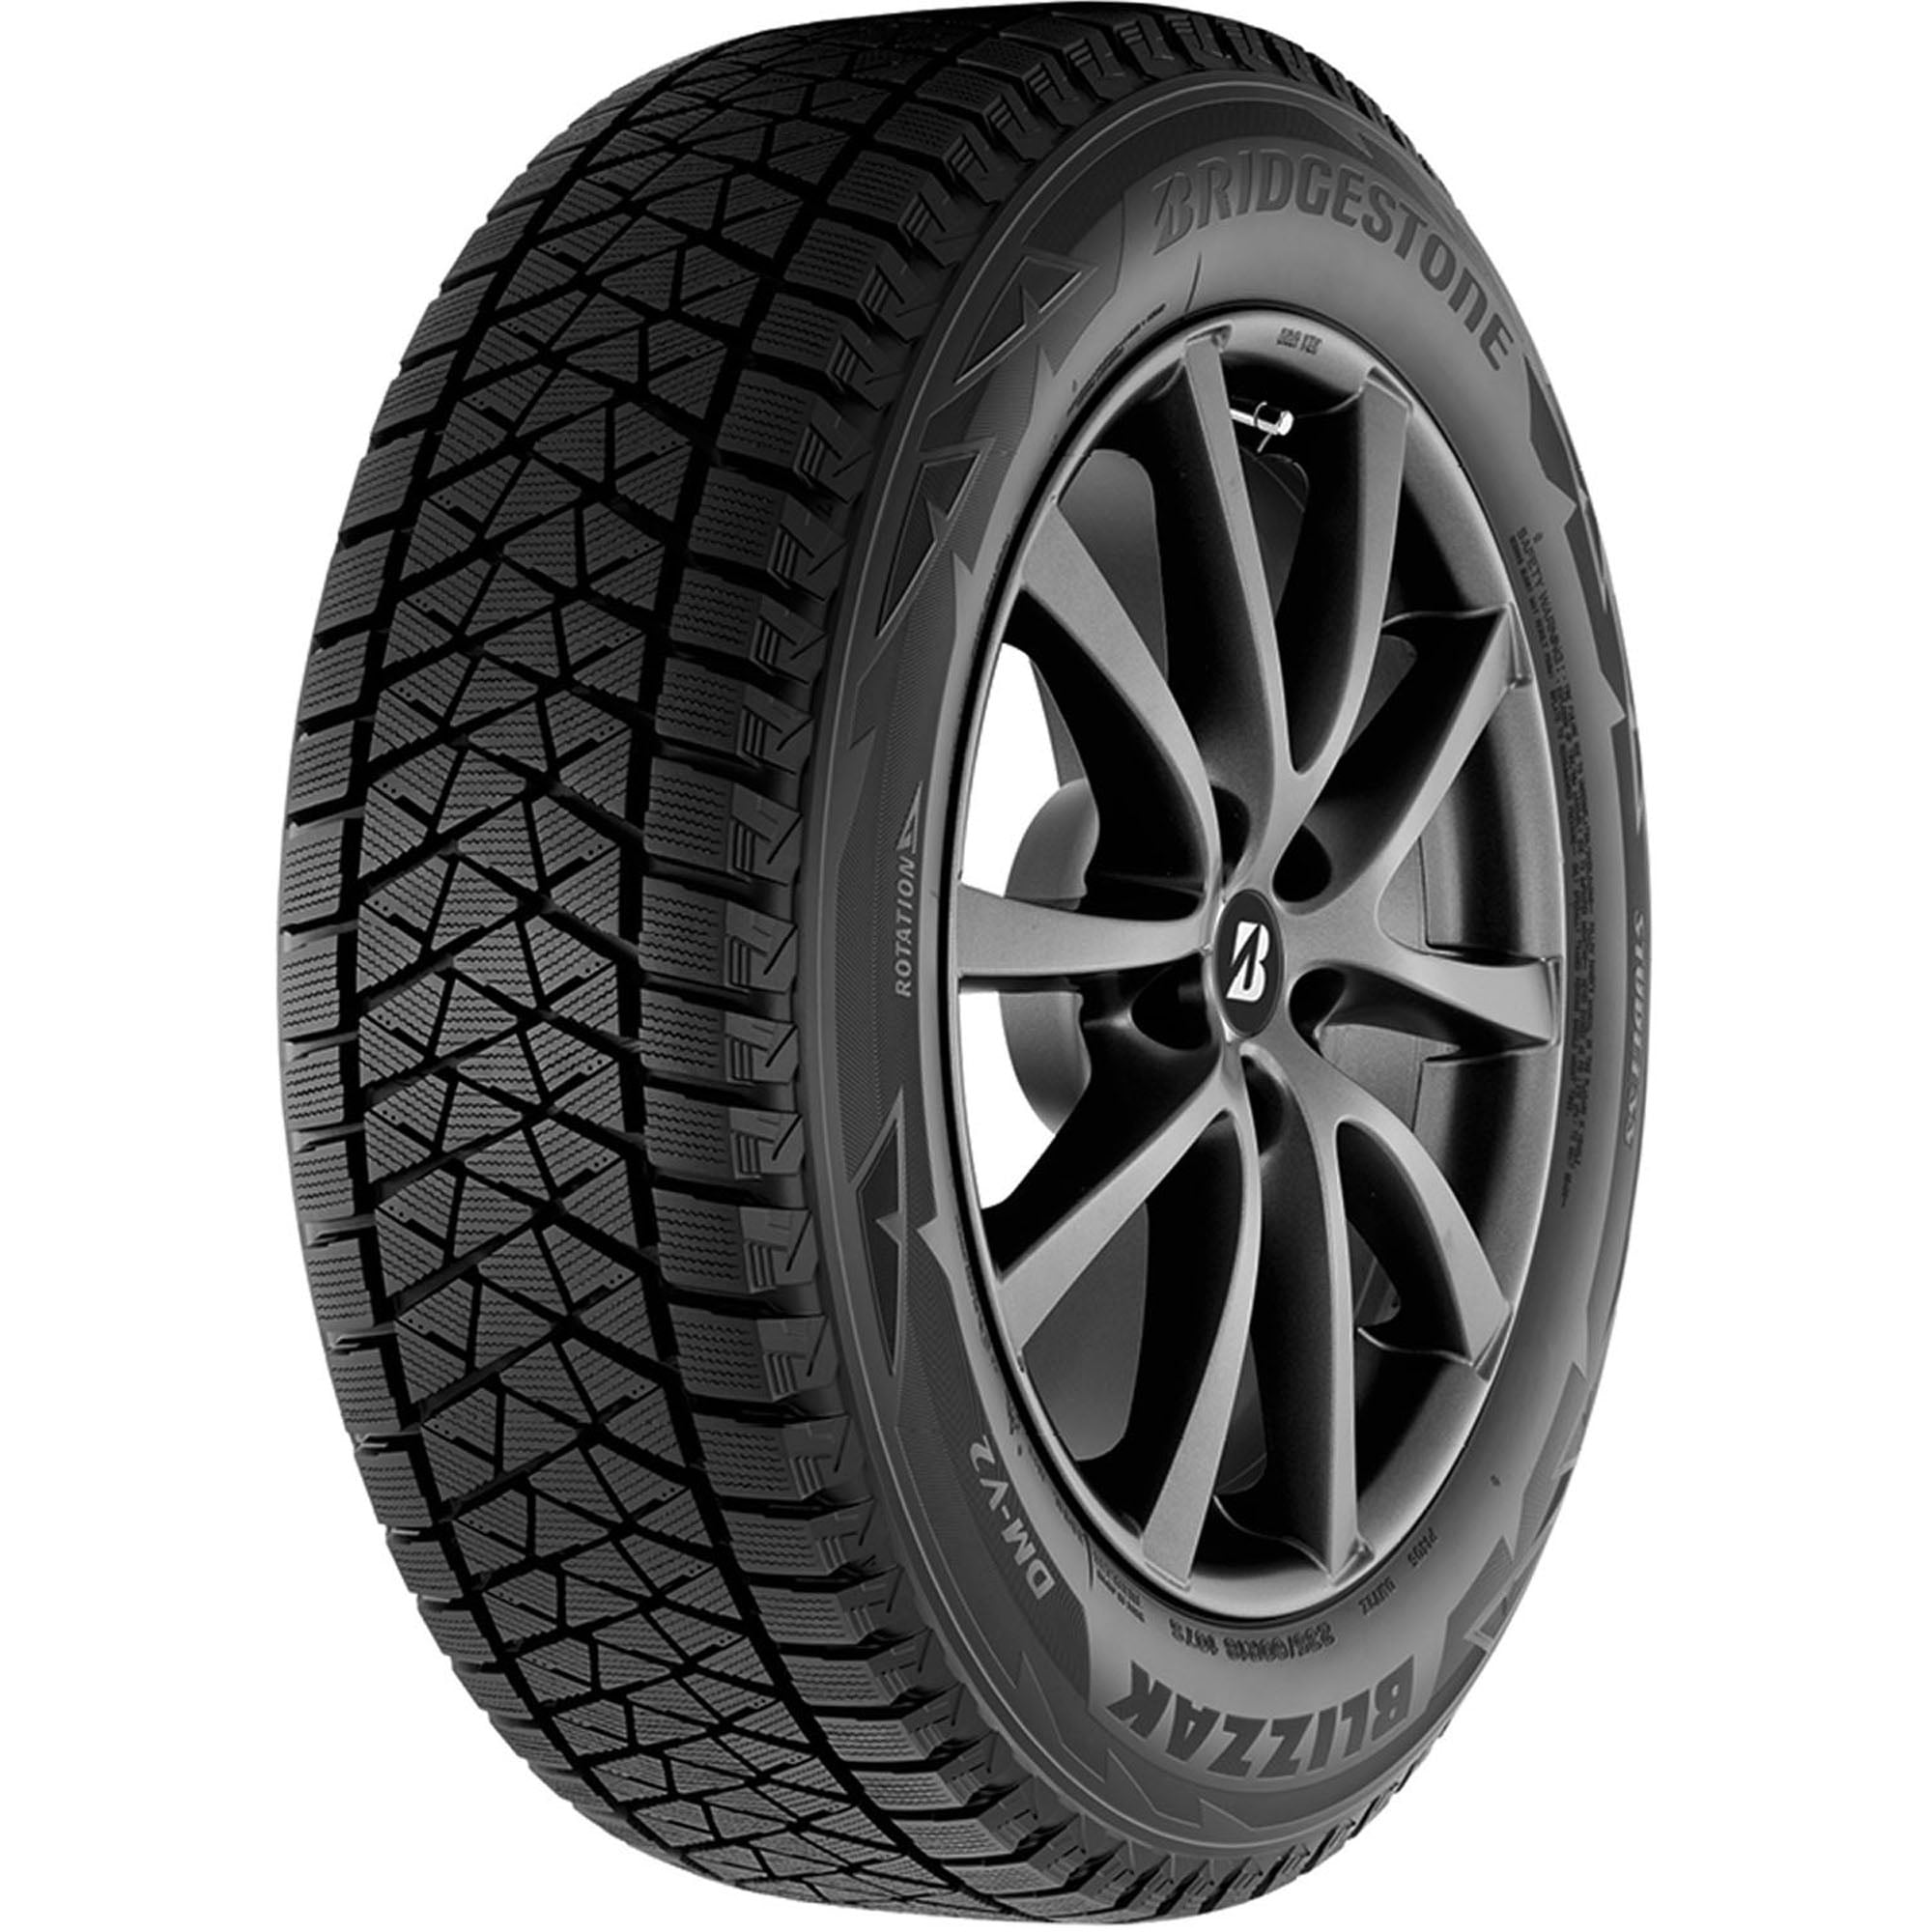 102 Goodyear Winter T 225/65R17 Tire. Ultra Grip